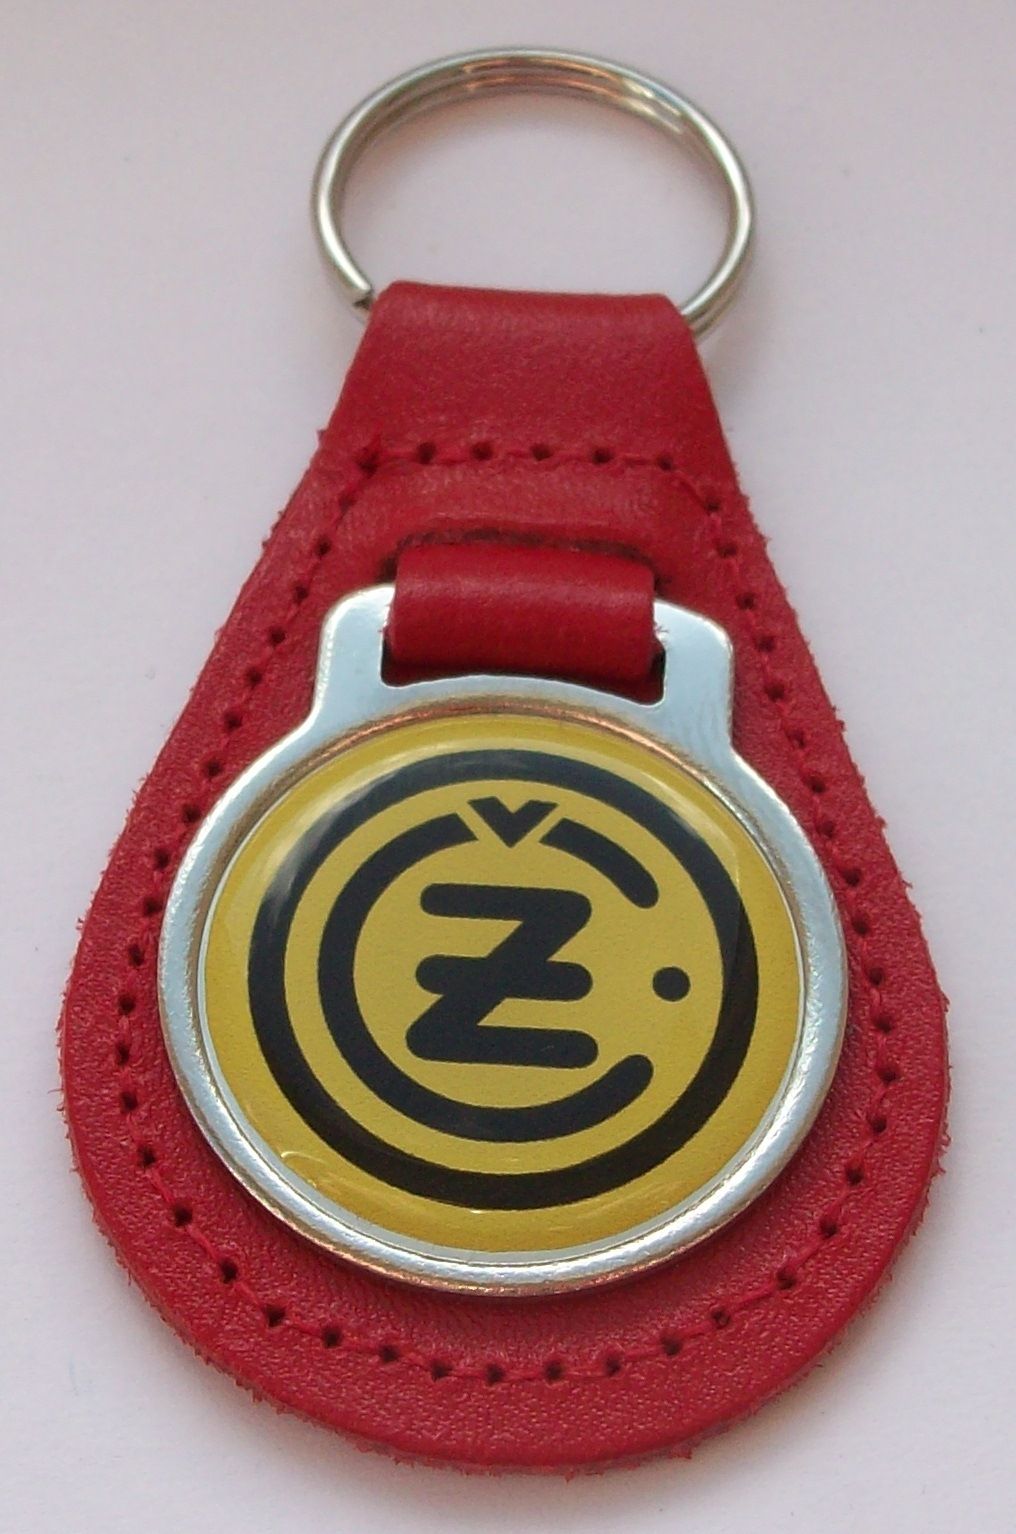 CZ acrylic badged red leather keyring.